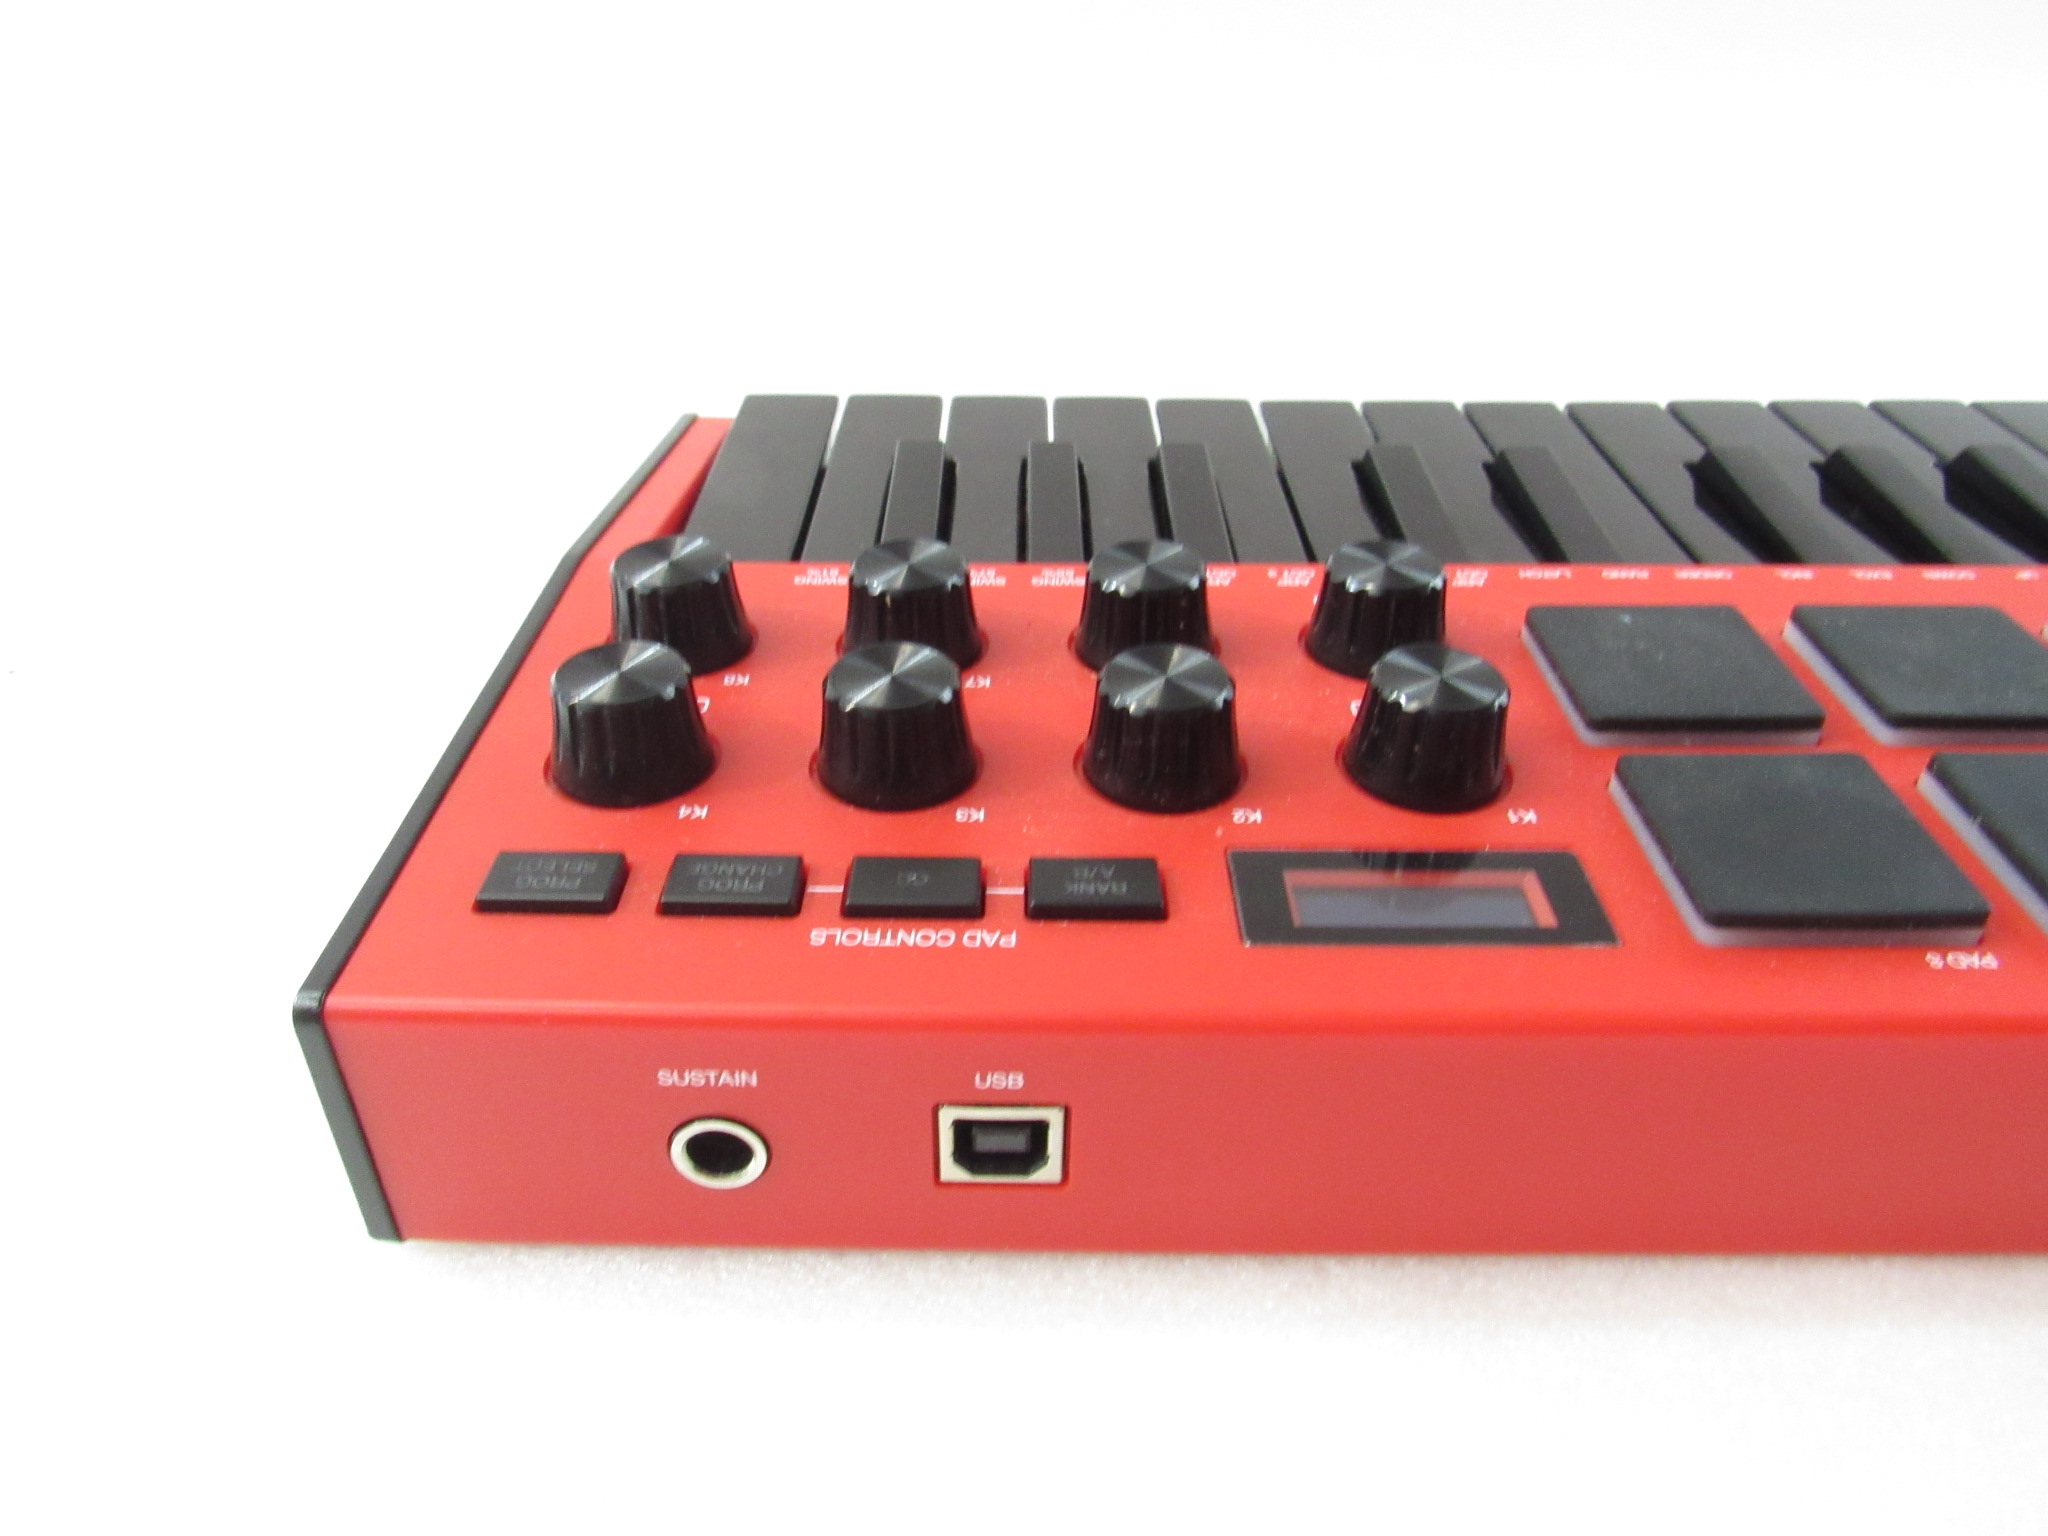 Akai Professional Mpk Mini Mk3 Keyboard Controller : Target